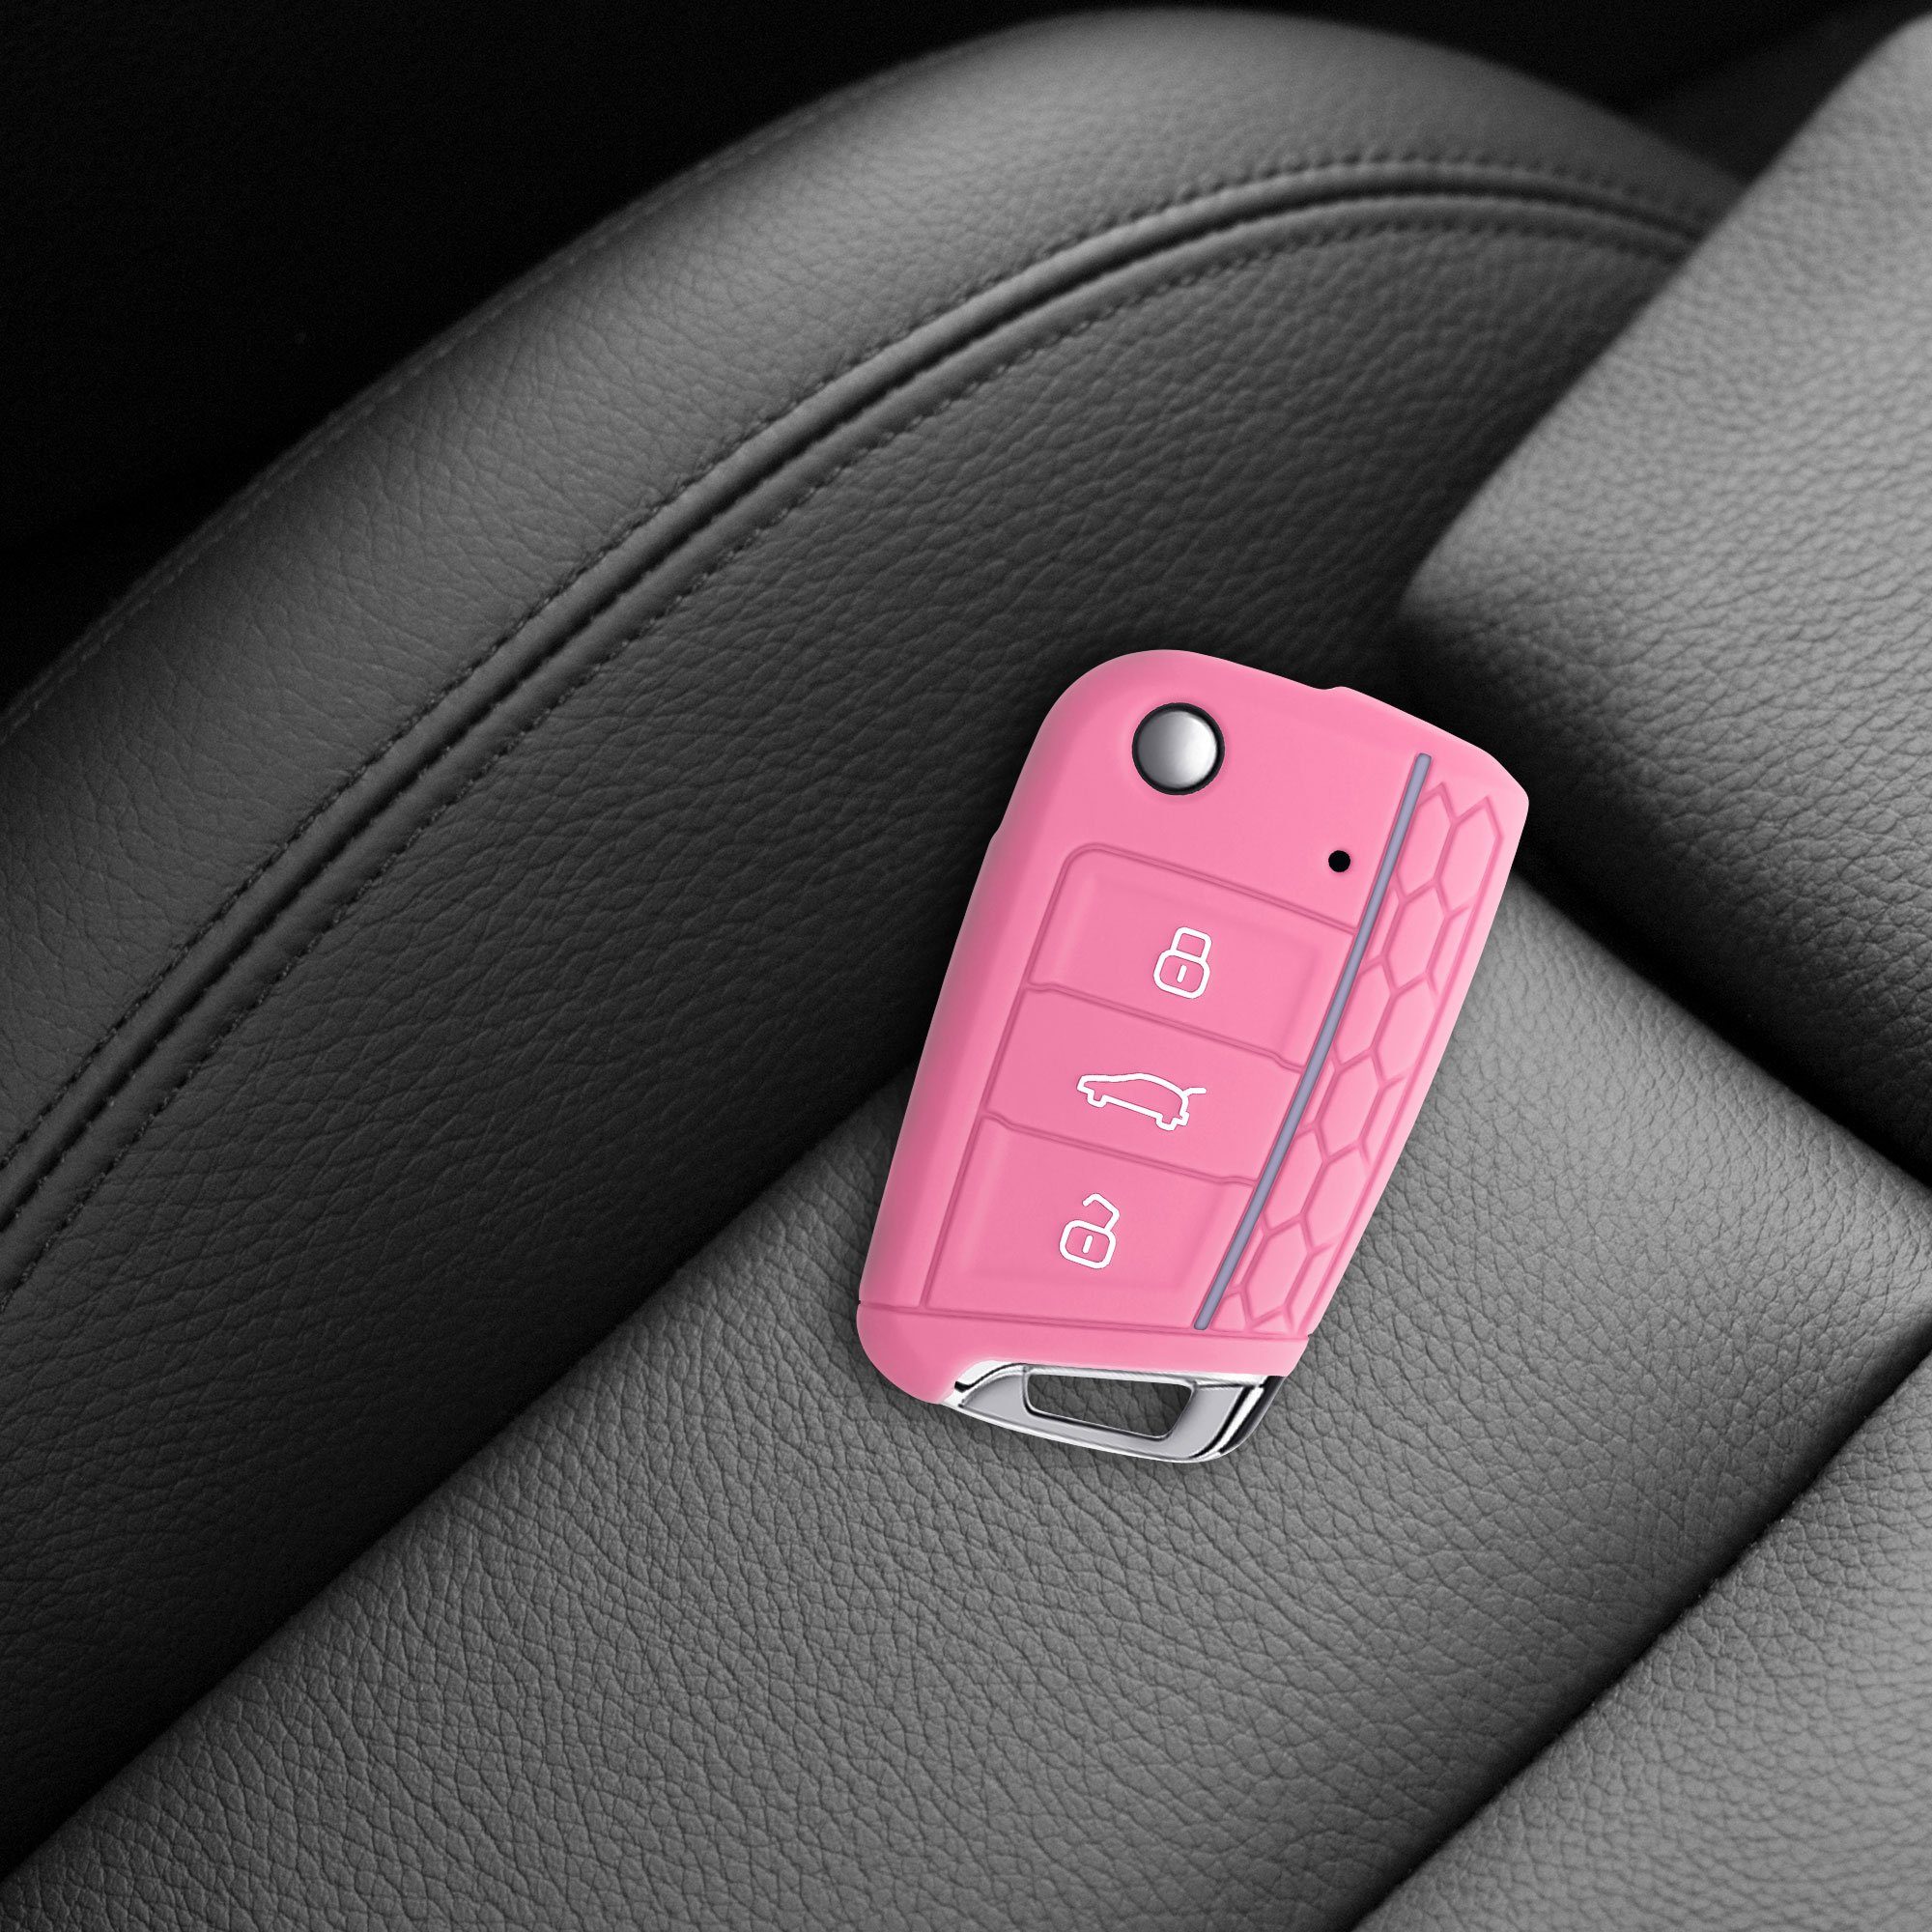 kwmobile Schlüsseltasche Autoschlüssel MK7, Schlüsselhülle 7 VW Silikon Rosa-Pastelllila für Golf Hülle Case Cover Schlüssel